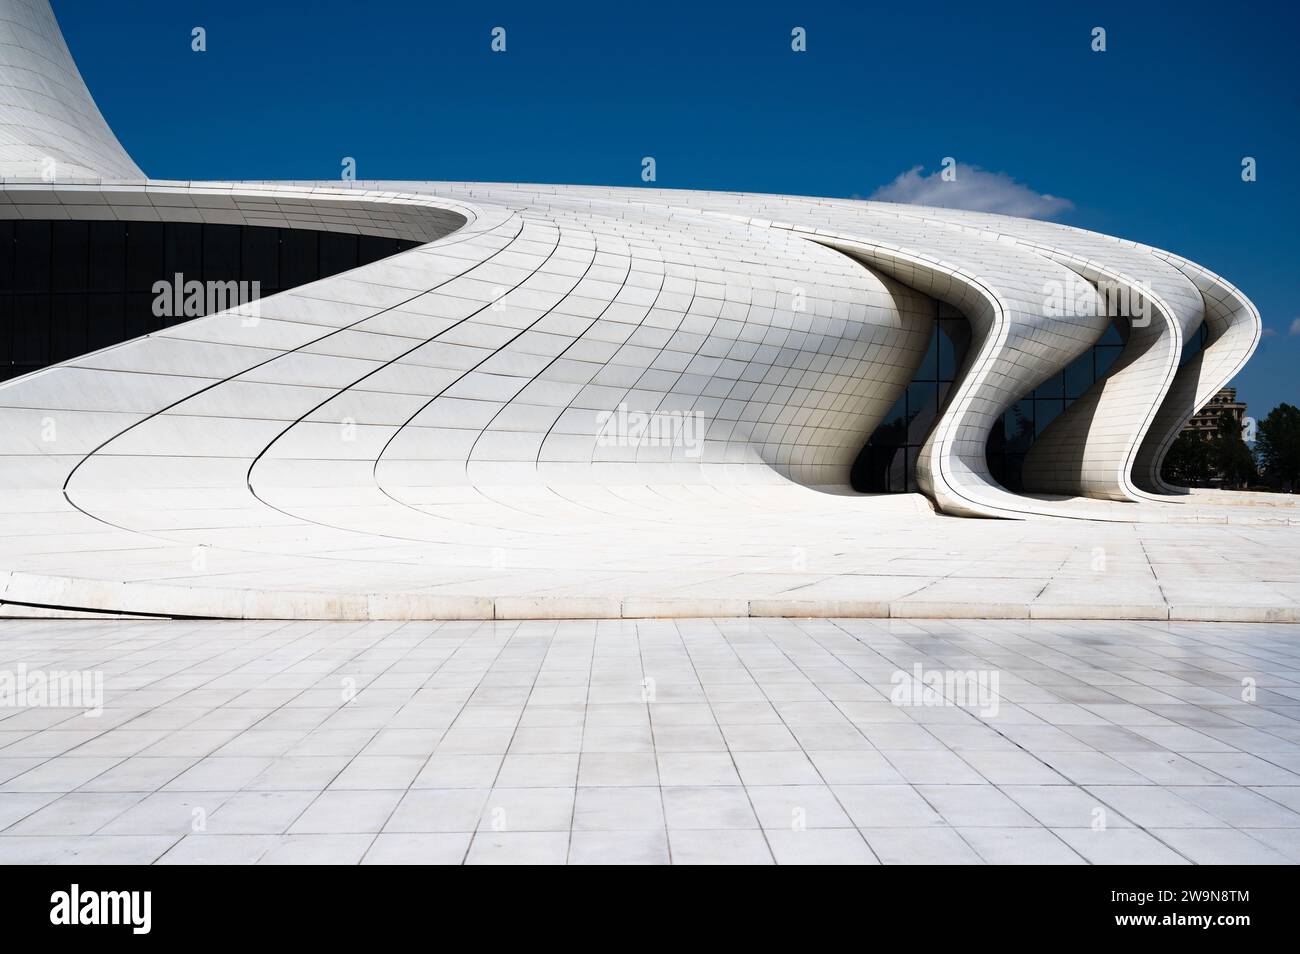 Heydar Aliyev Convention Centre in Baku, capital city of former Soviet country of Azerbaijan. Designed by renown architect, the late Zaha Hadid. Stock Photo